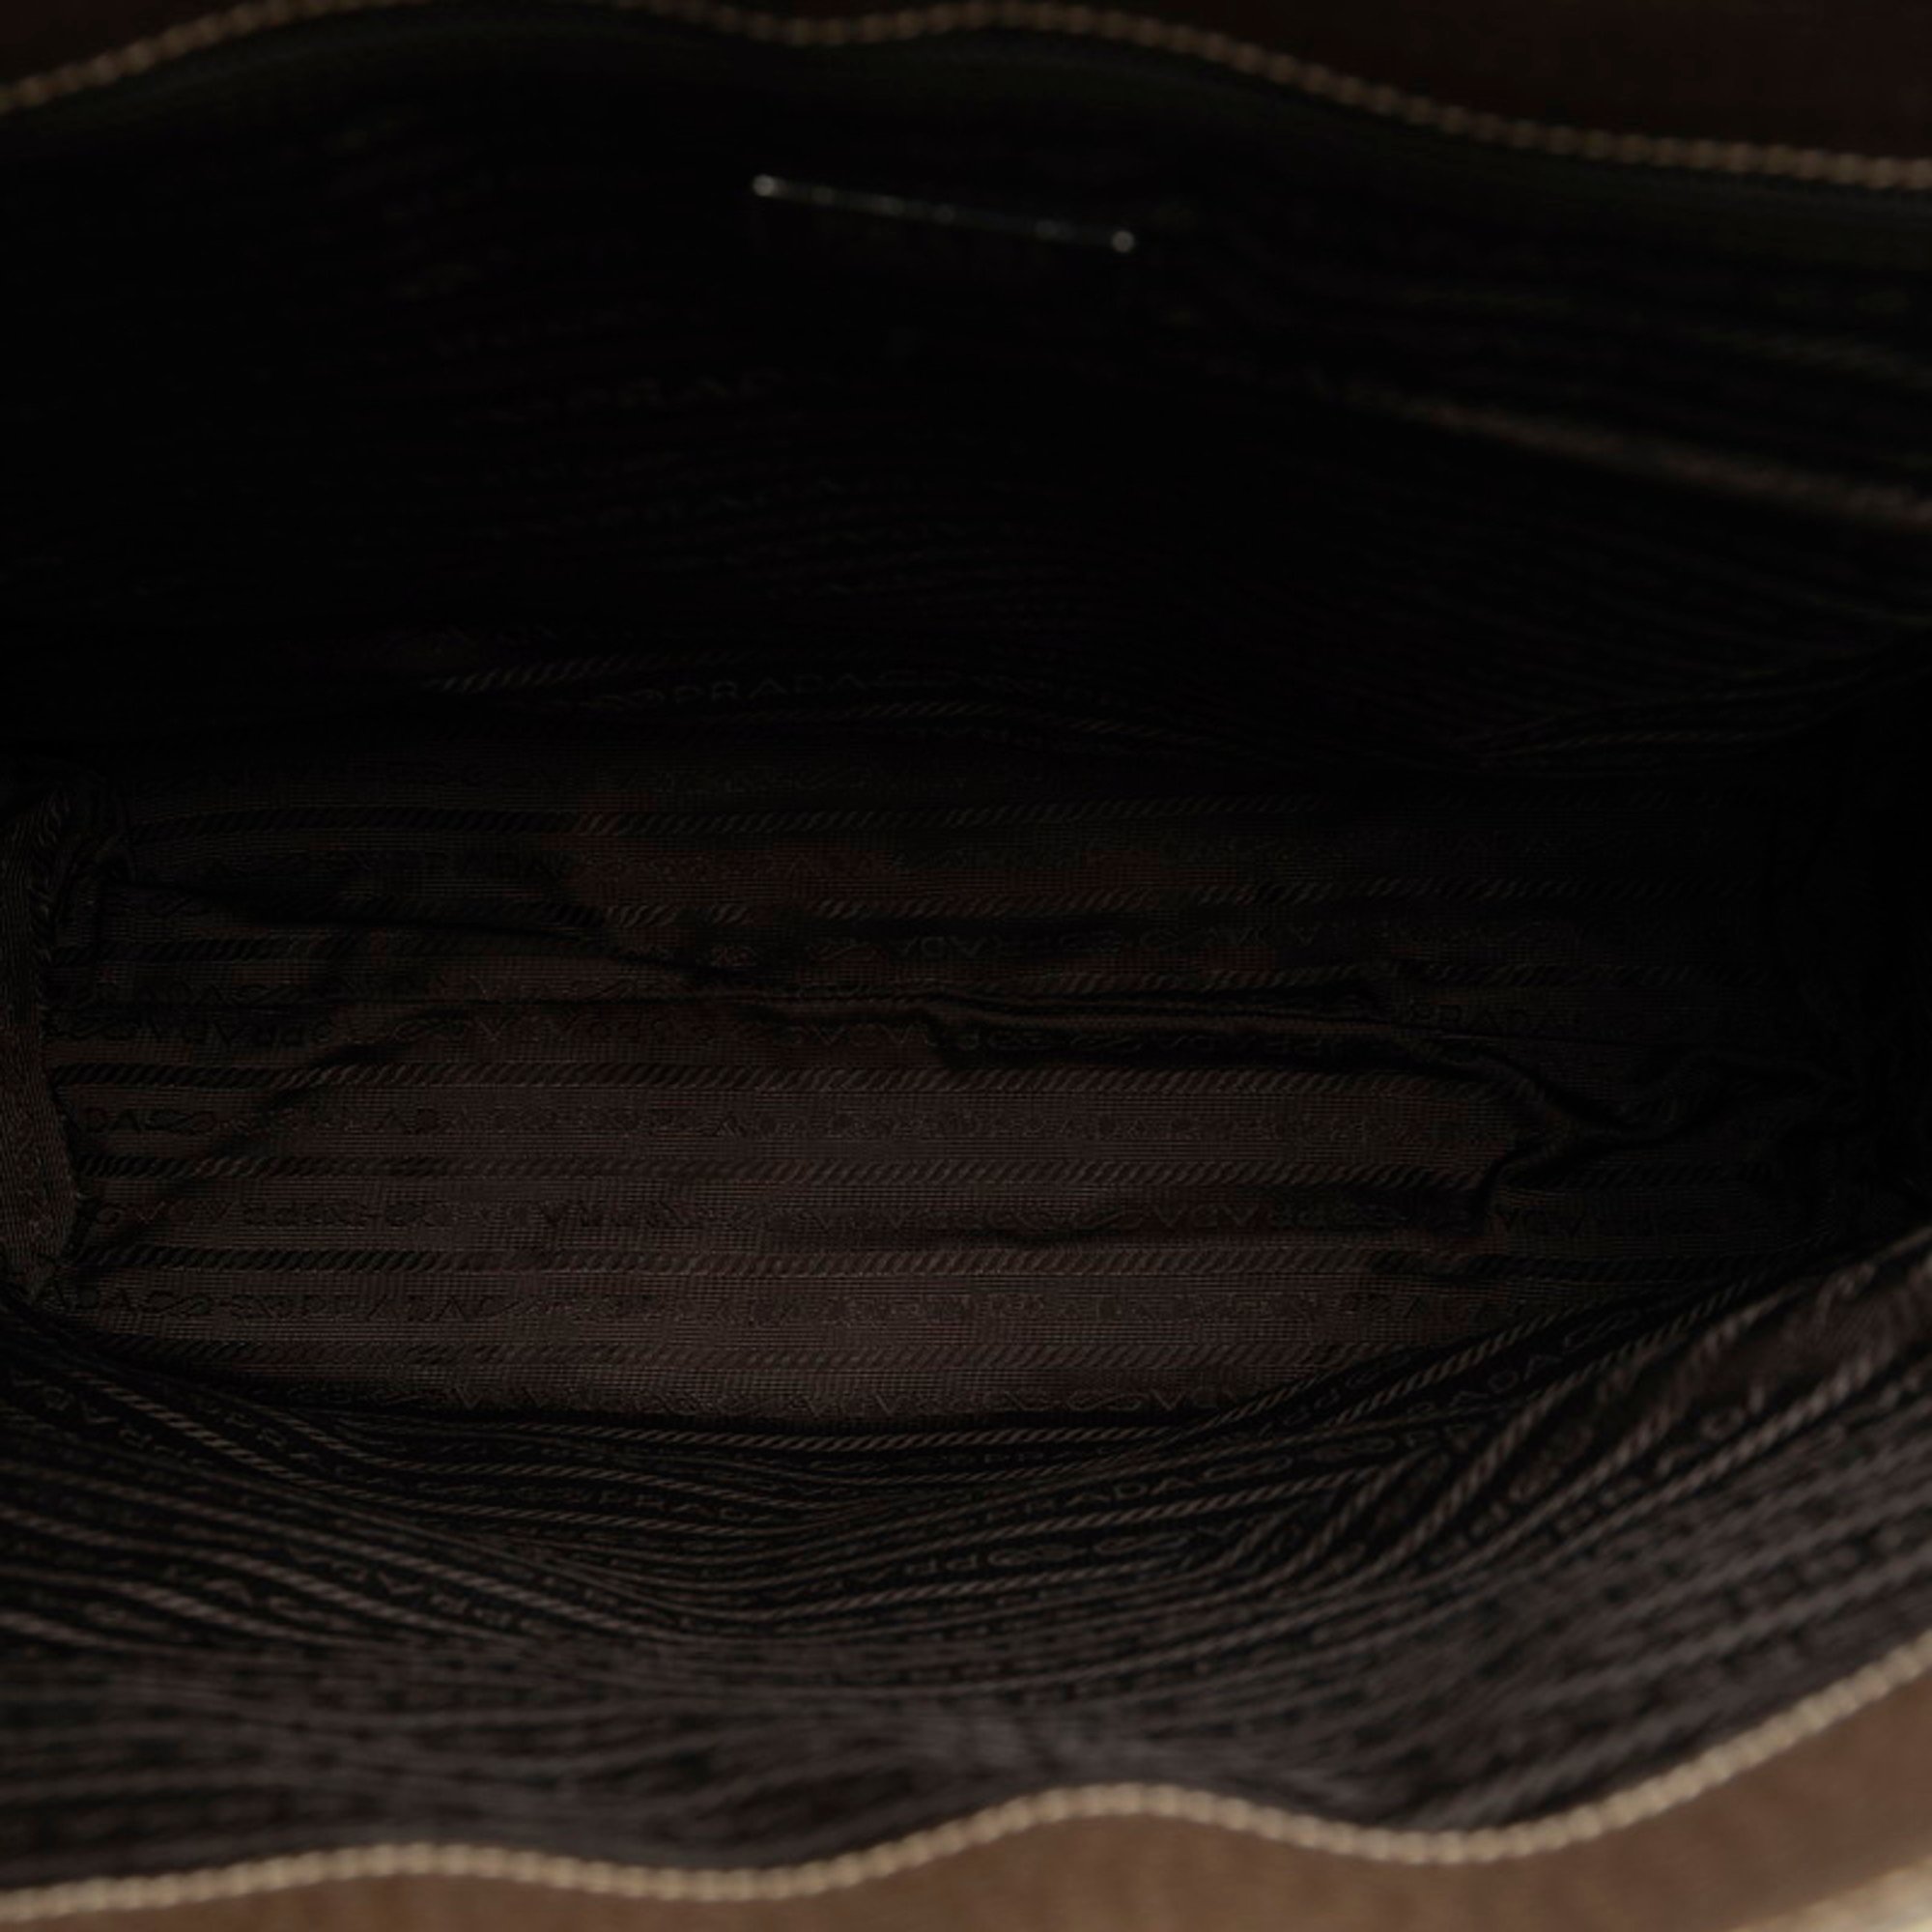 Prada Triangle Plate Tote Bag Khaki Brown Canvas Leather Women's PRADA